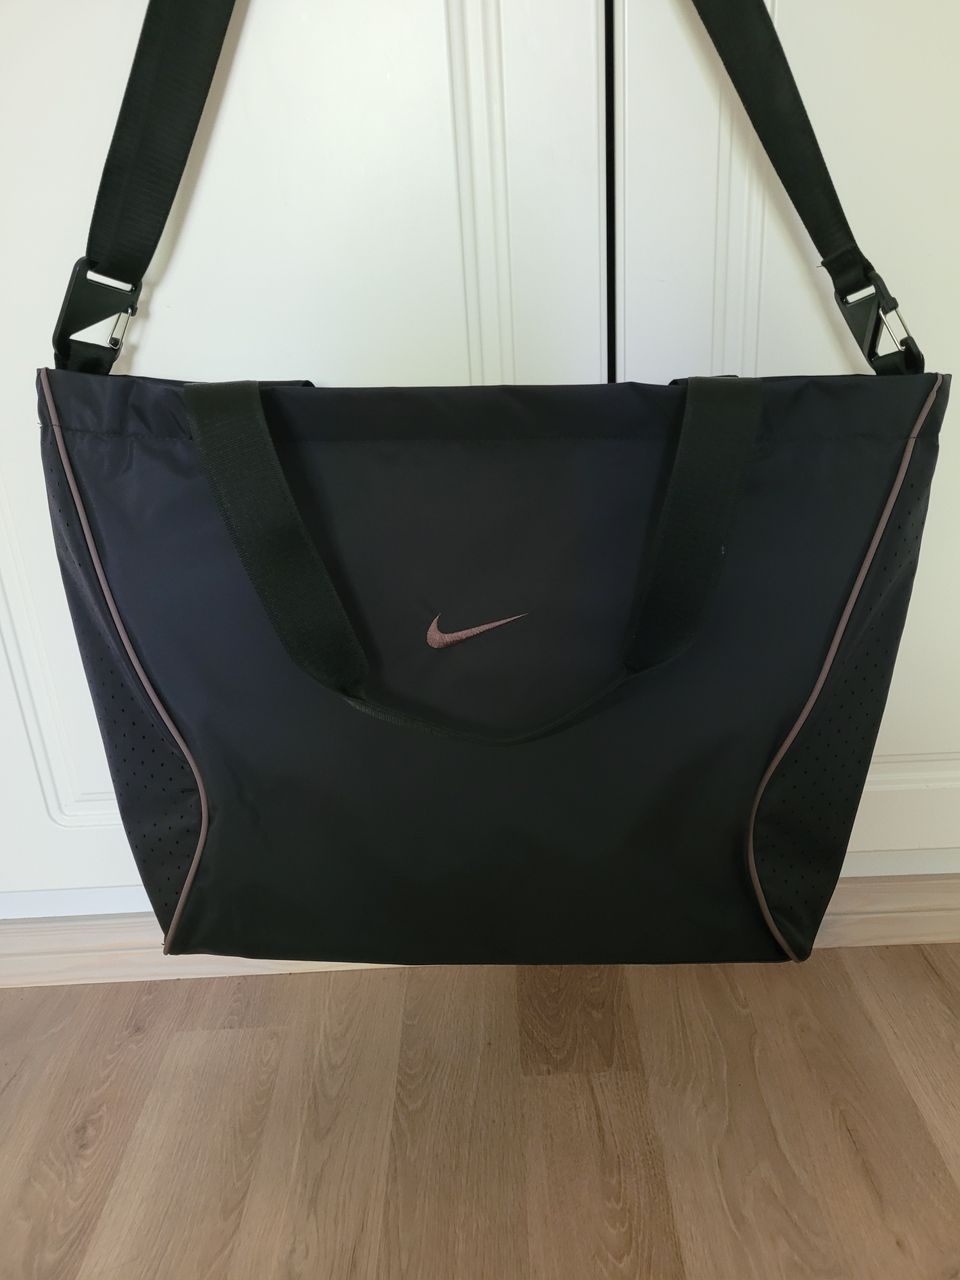 Nike iso shopping bag